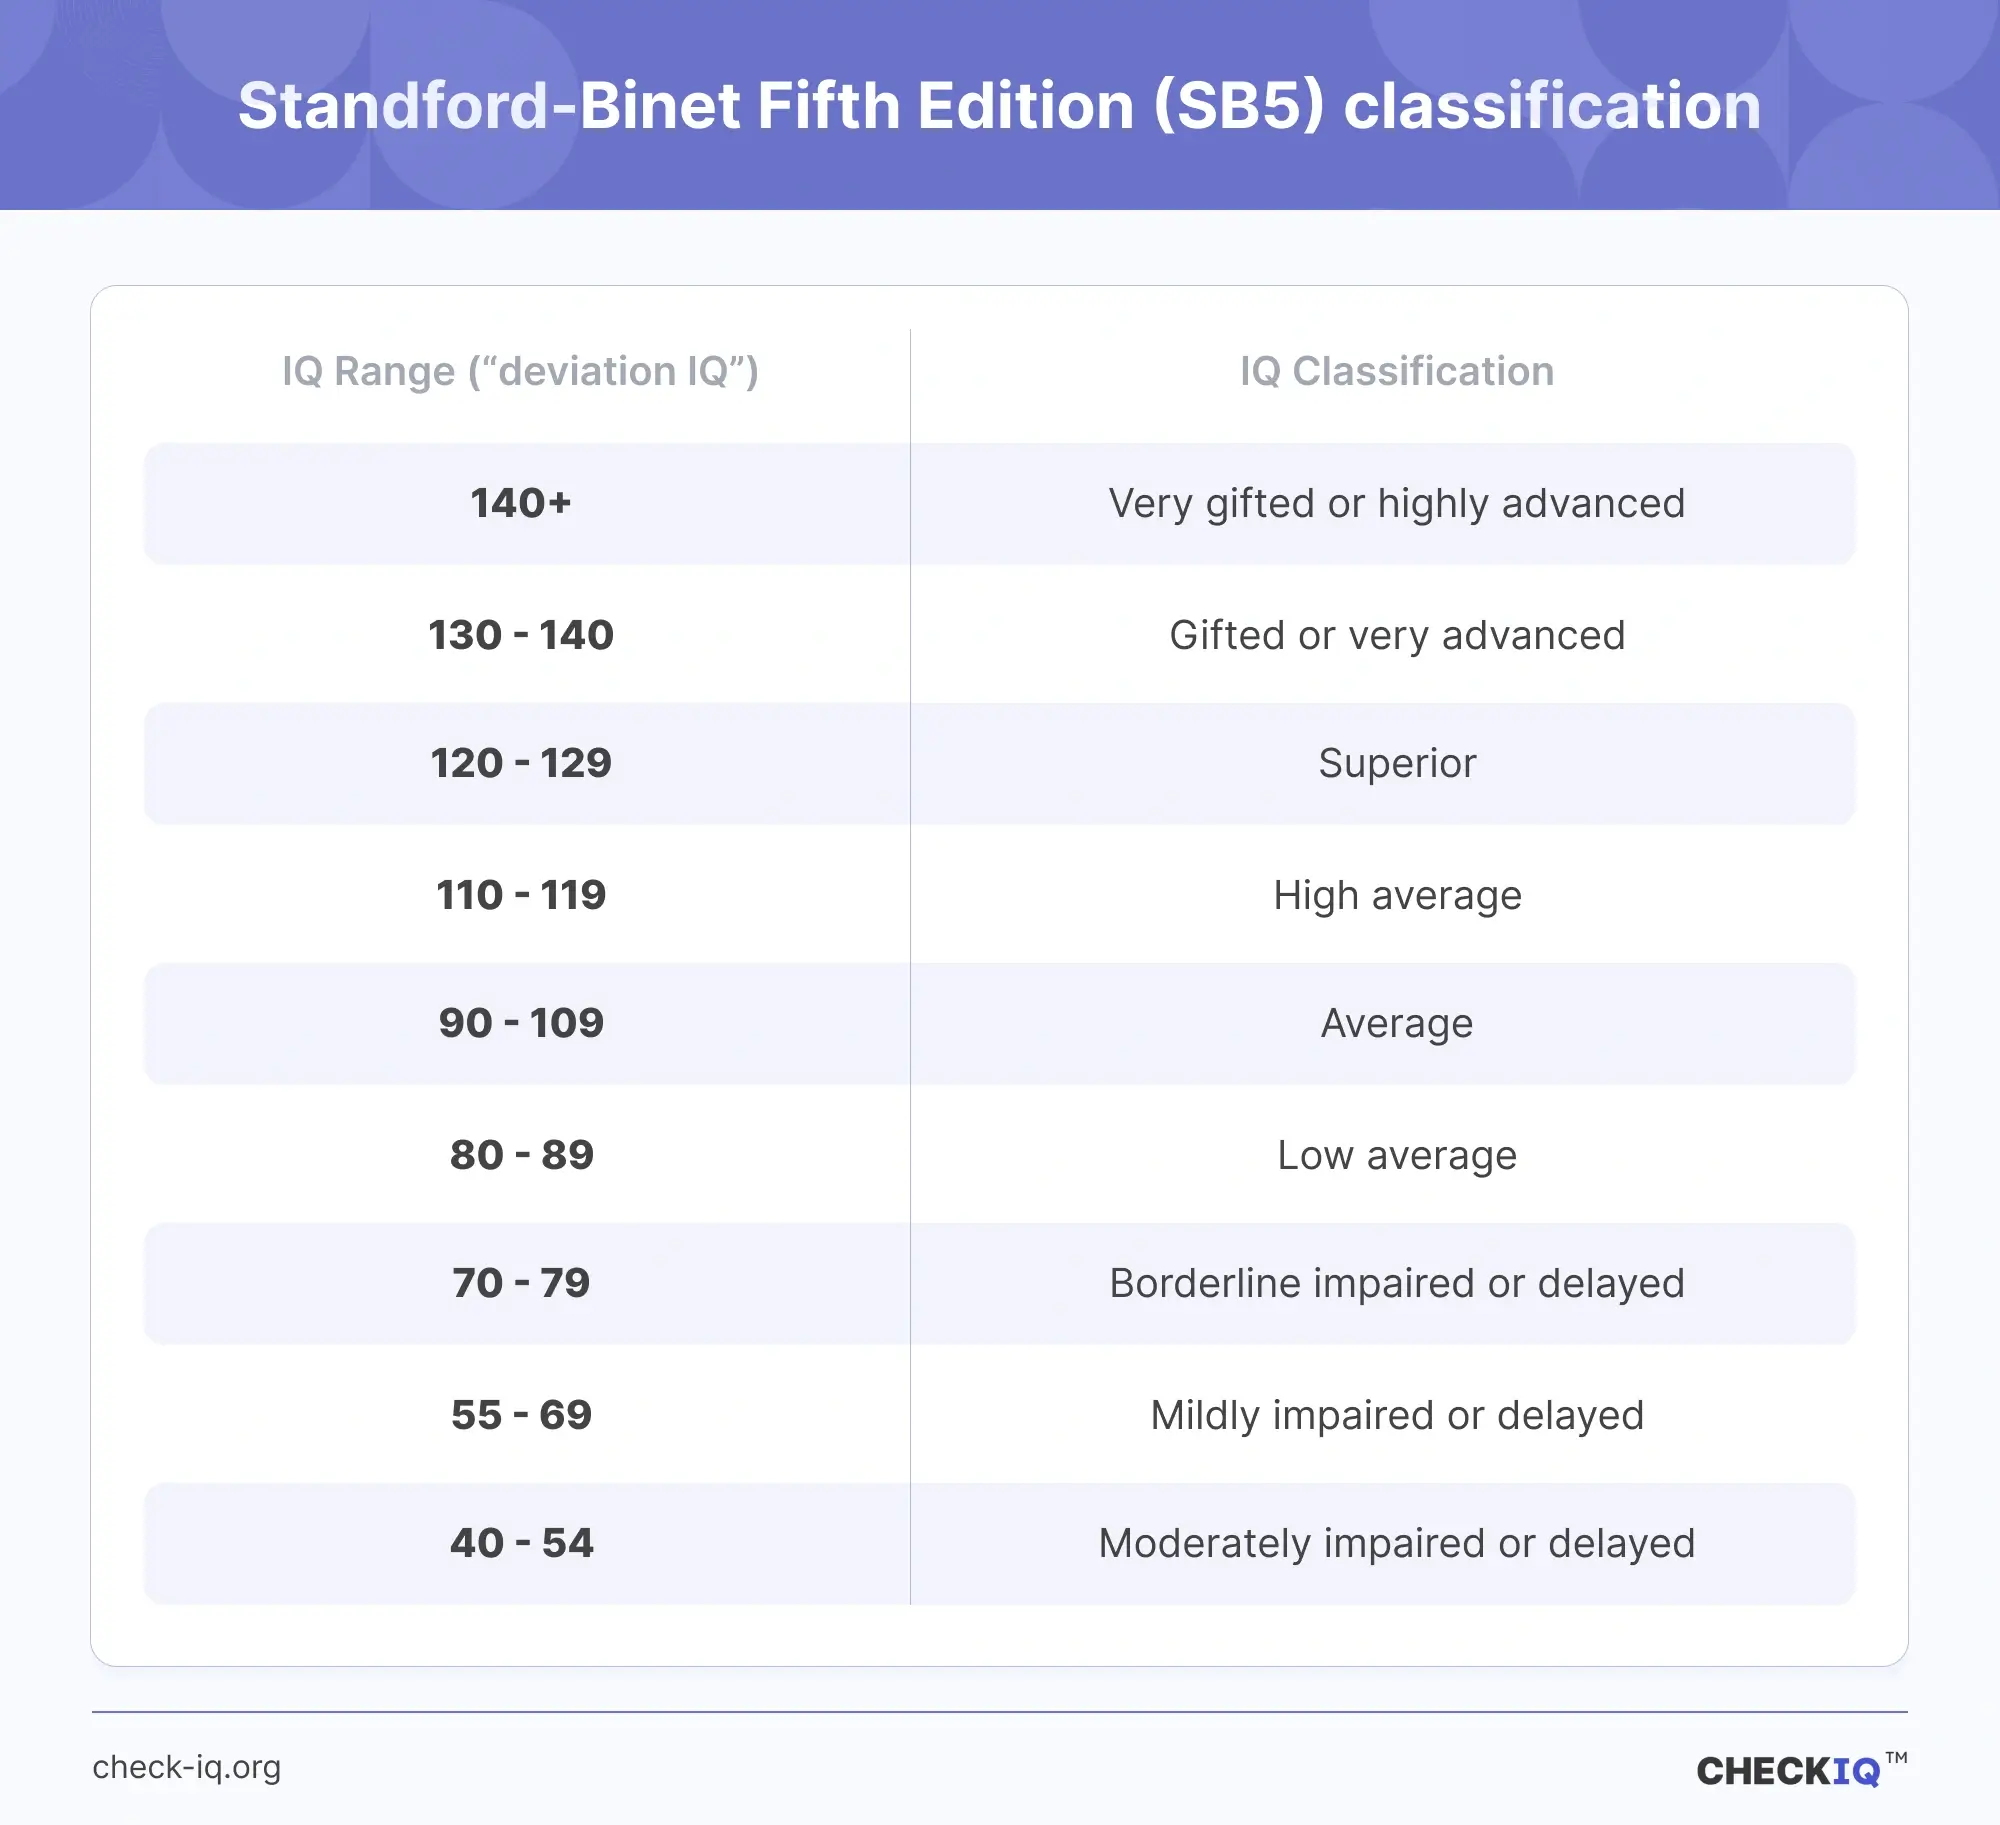 Stanford-Binet Fifth Edition IQ classification: SB5 test score ranges